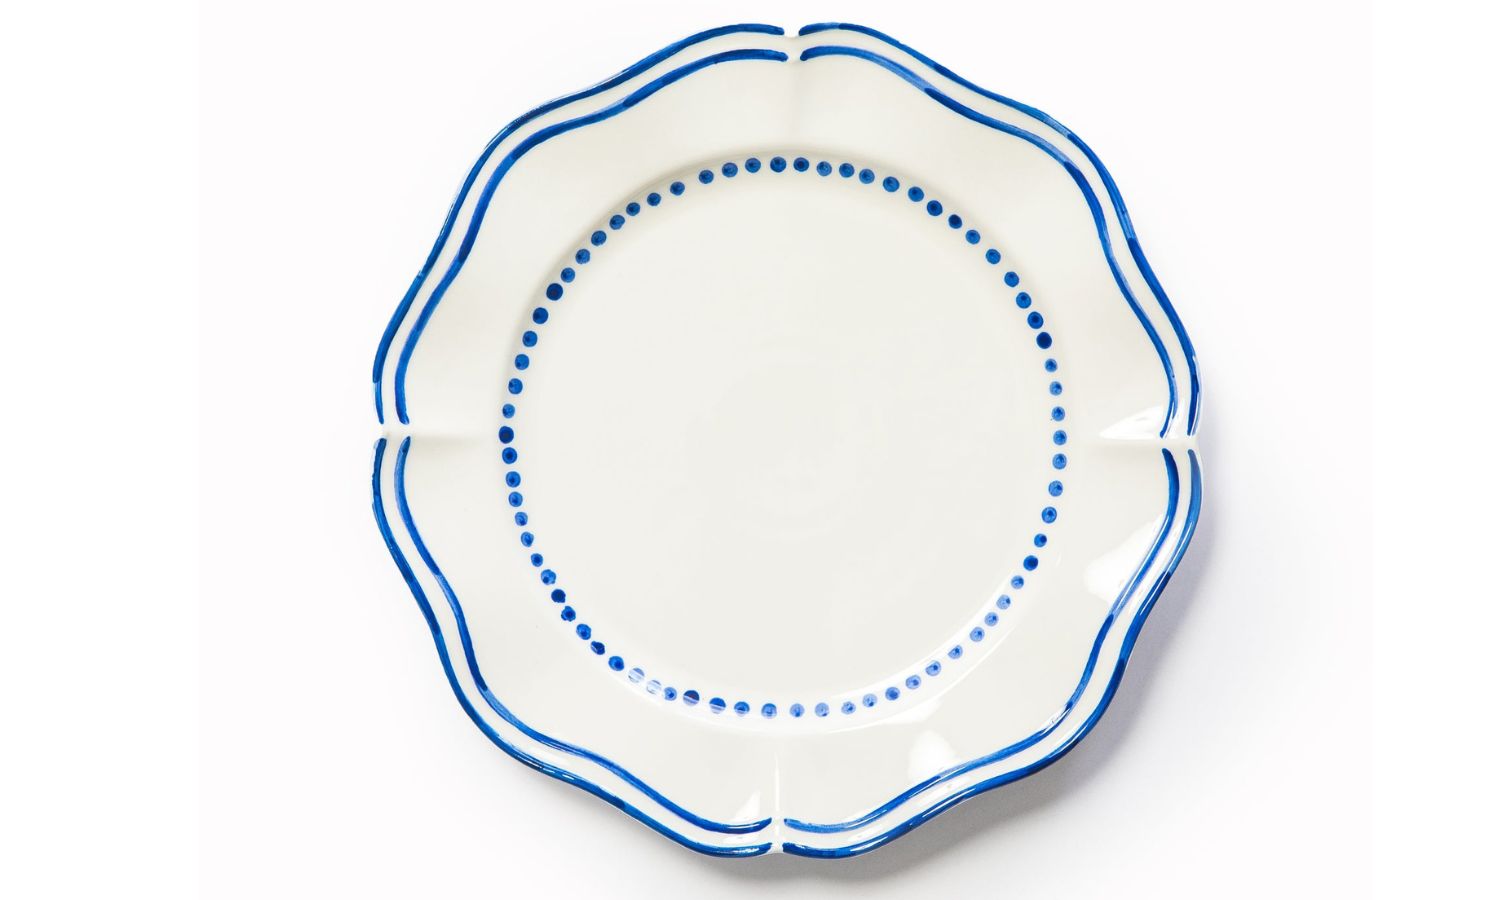 No 22 Capri plates